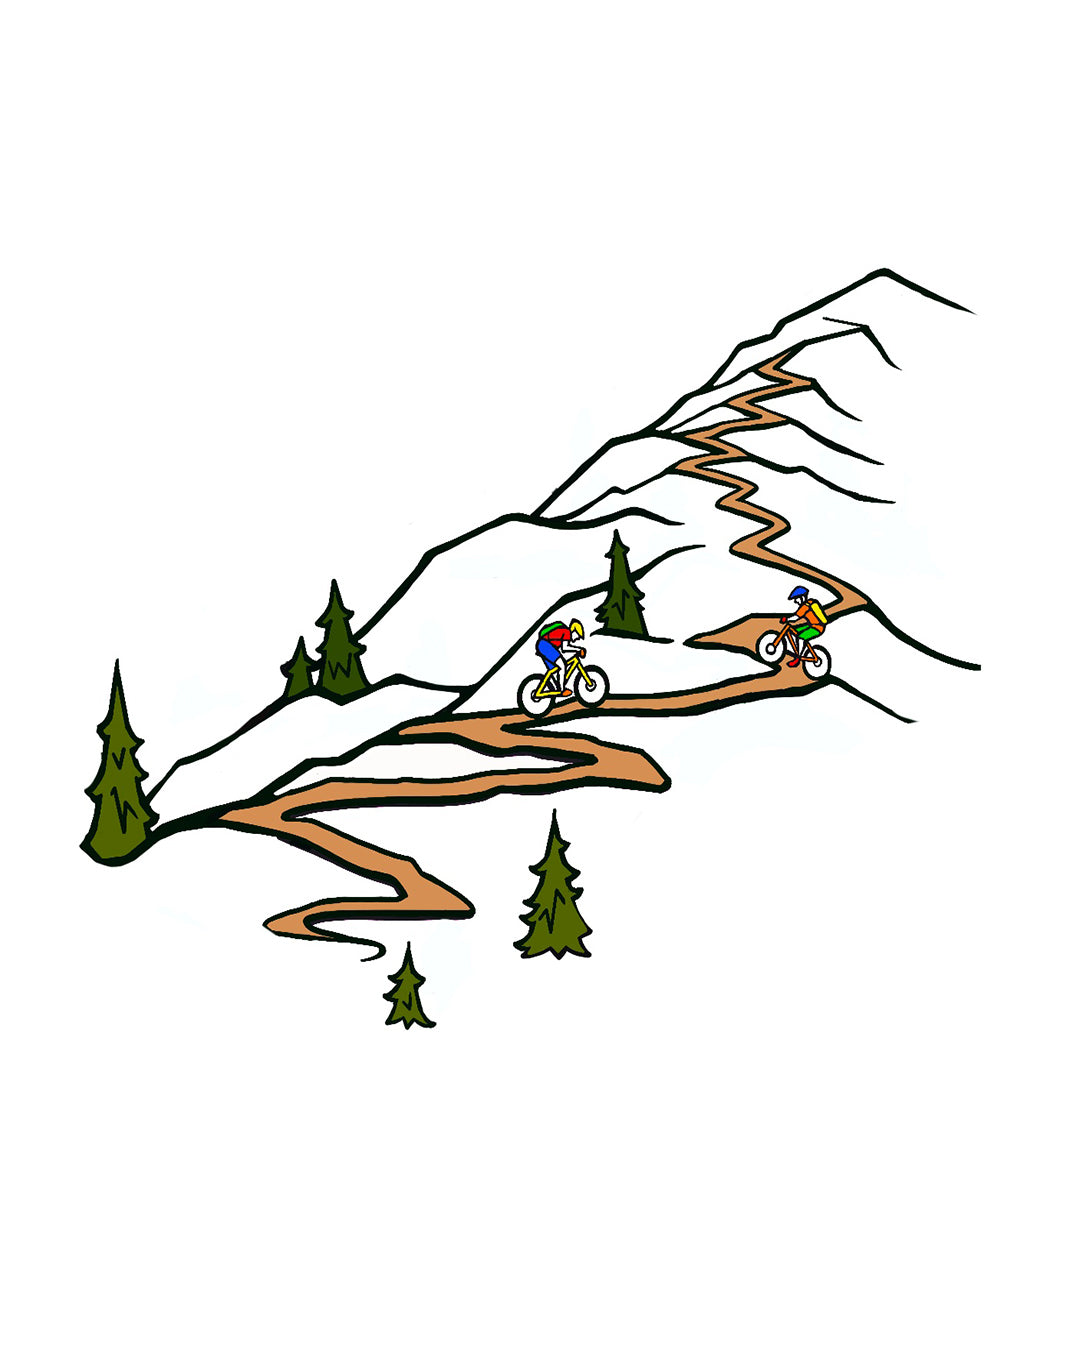 Lifts & Trails - Mountain Biking Bundle